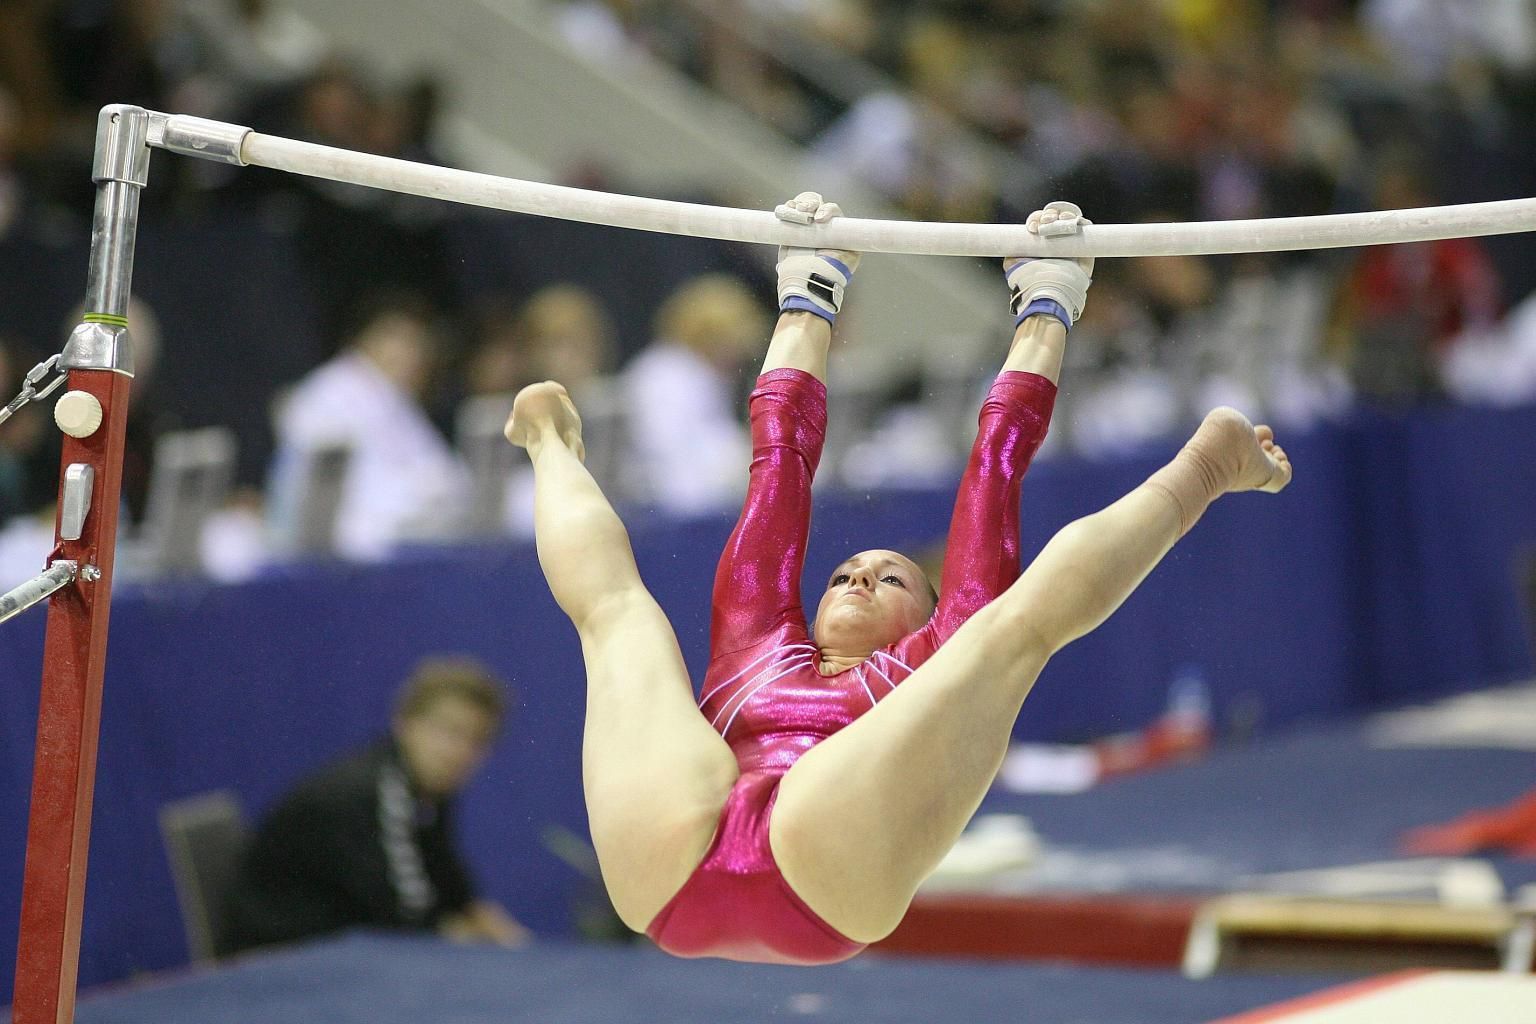 Красивая обнаженная гимнастка скачет на шаре